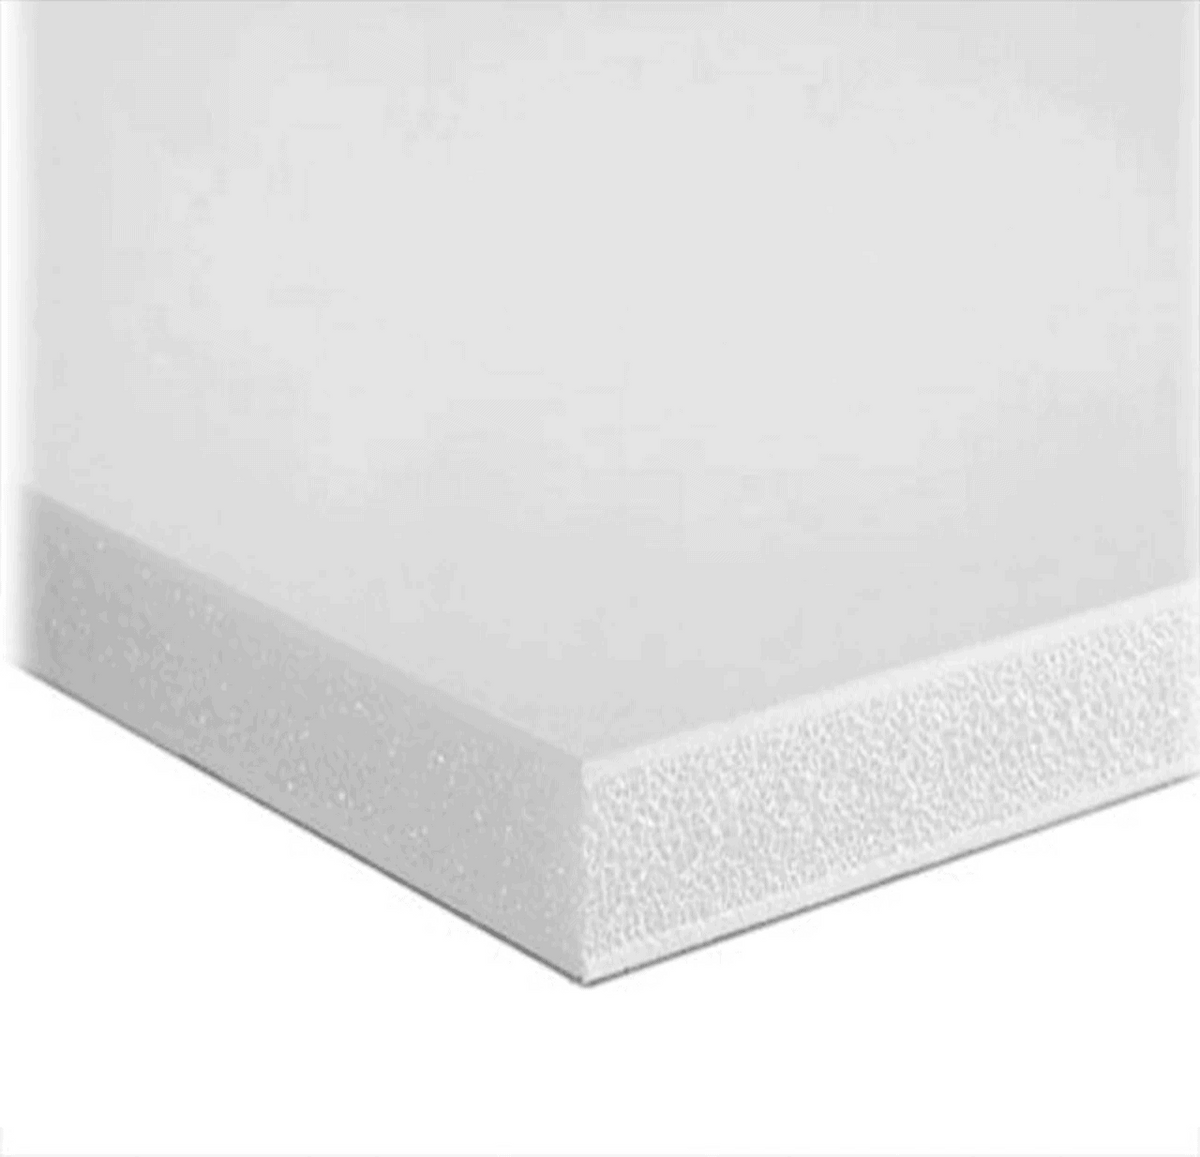  Foam Board 24 x 36 x 3/16 (5mm) - 12 Pack - White